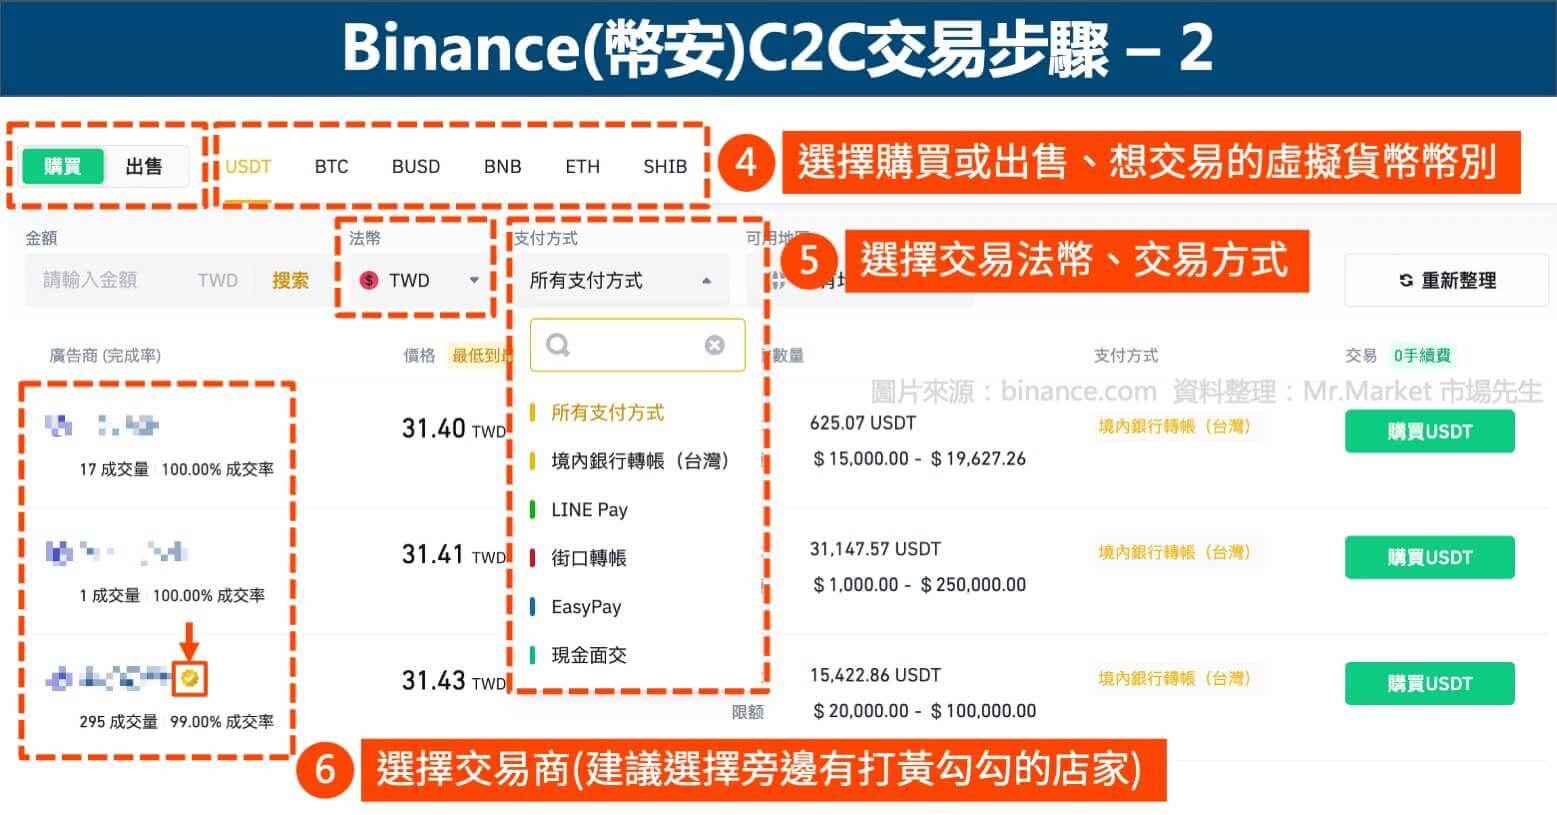 Binance(幣安)C2C交易步驟2